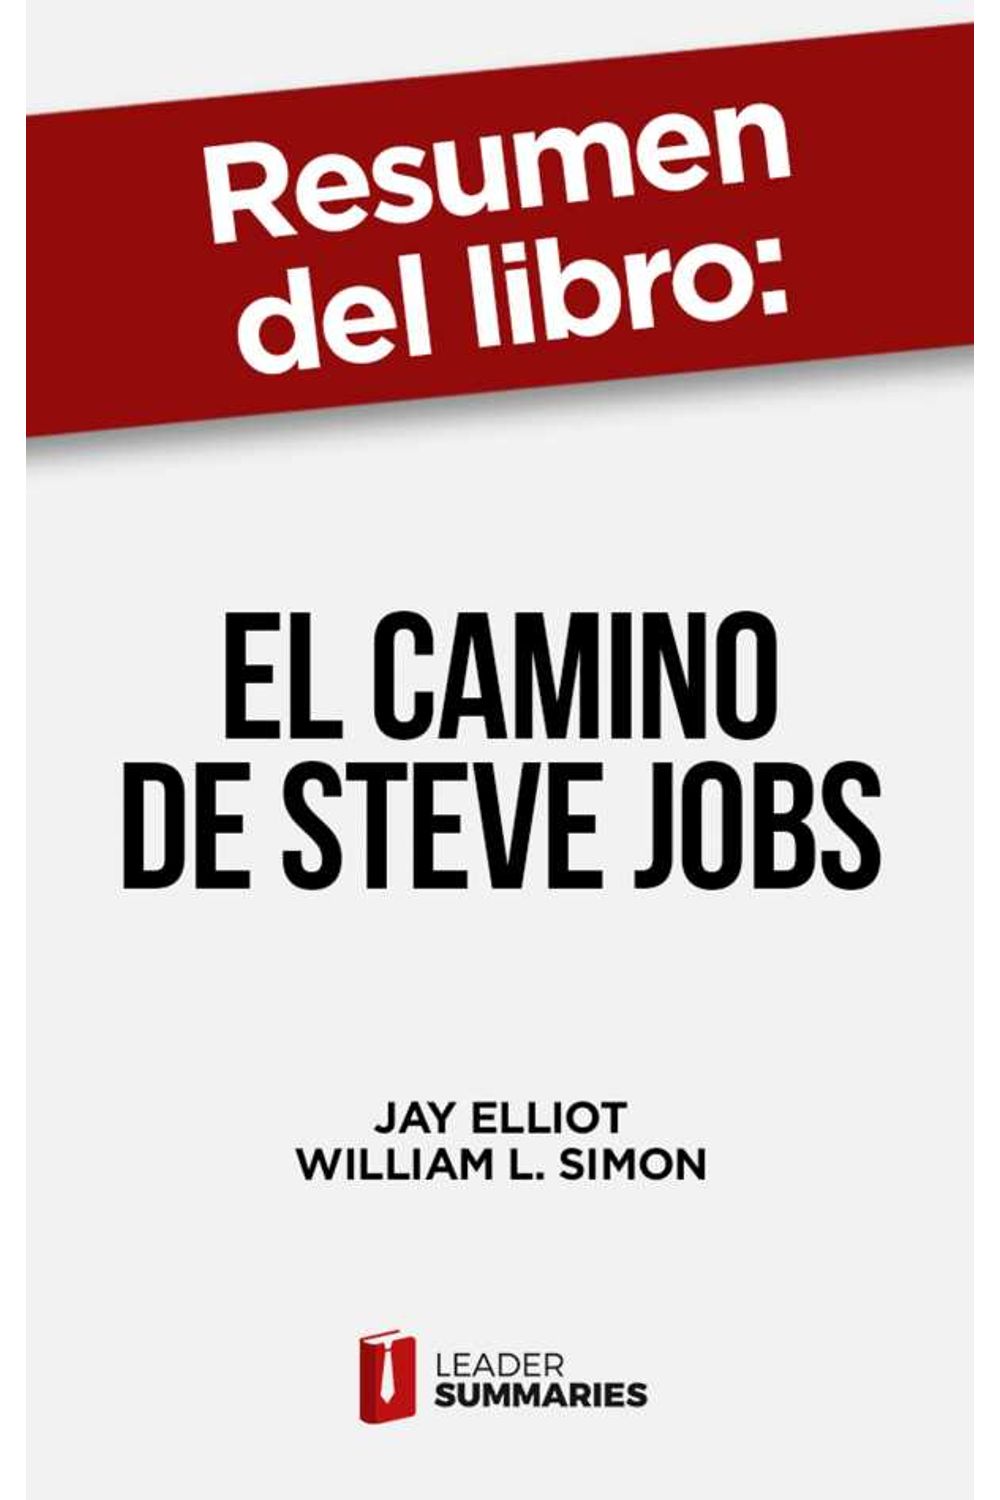 bw-resumen-del-libro-quotel-camino-de-steve-jobsquot-de-jay-elliot-leader-summaries-9788418959707